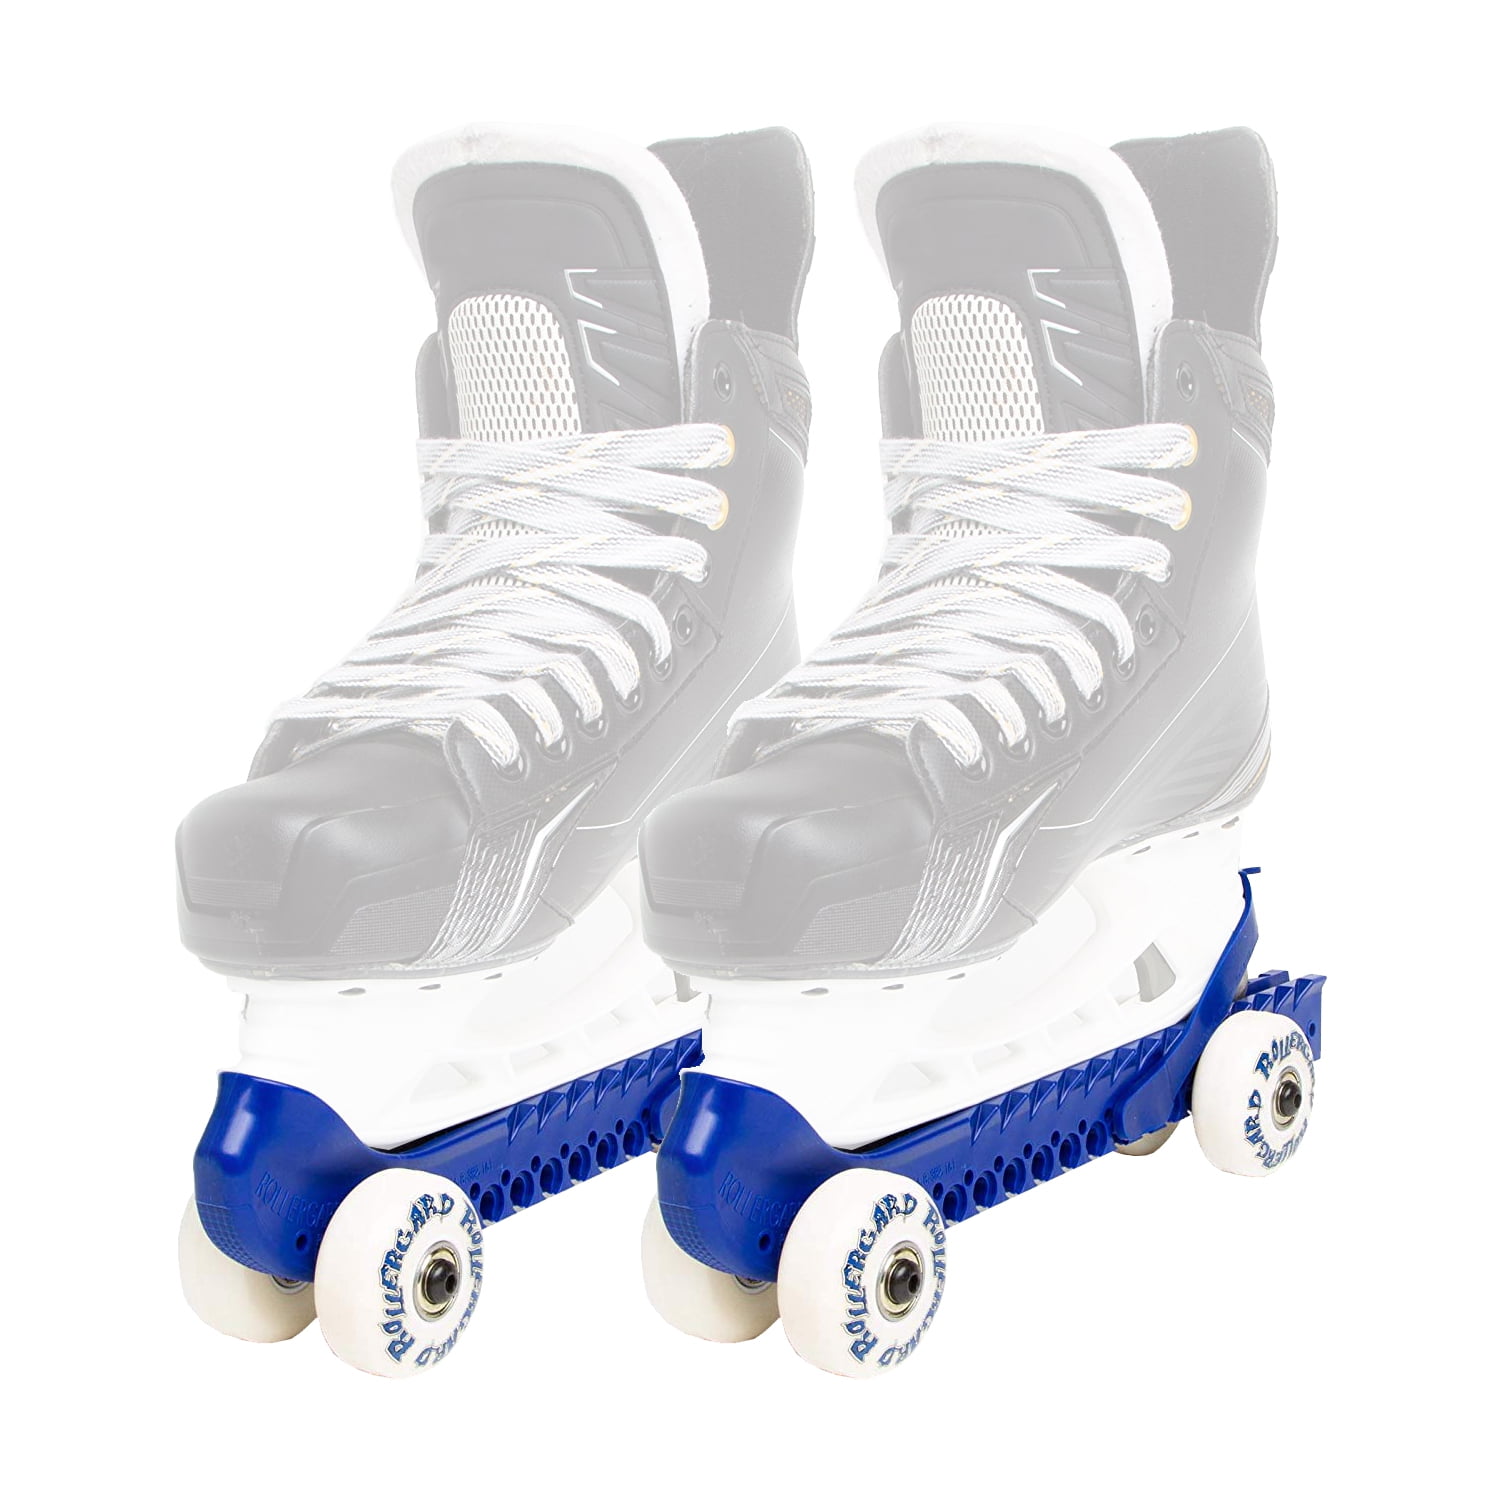 Blue HUDORA HD 2010 Ice Skates Set Size 1-3